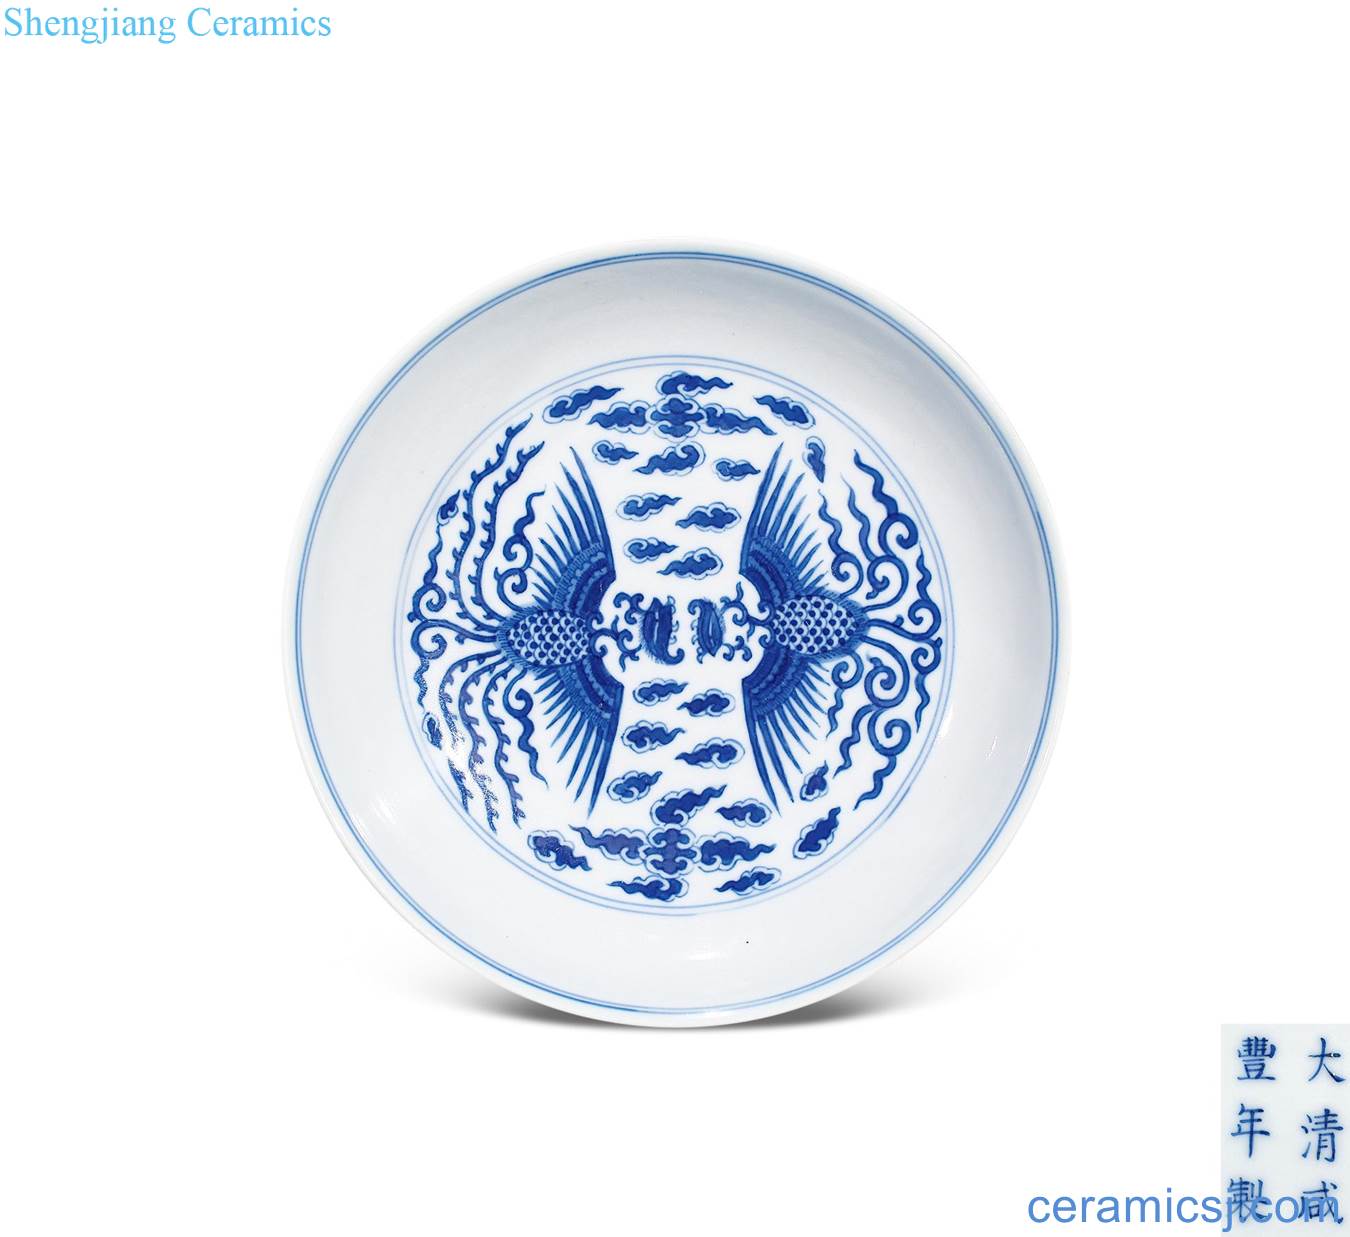 Qing xianfeng Blue and white double phoenix plate